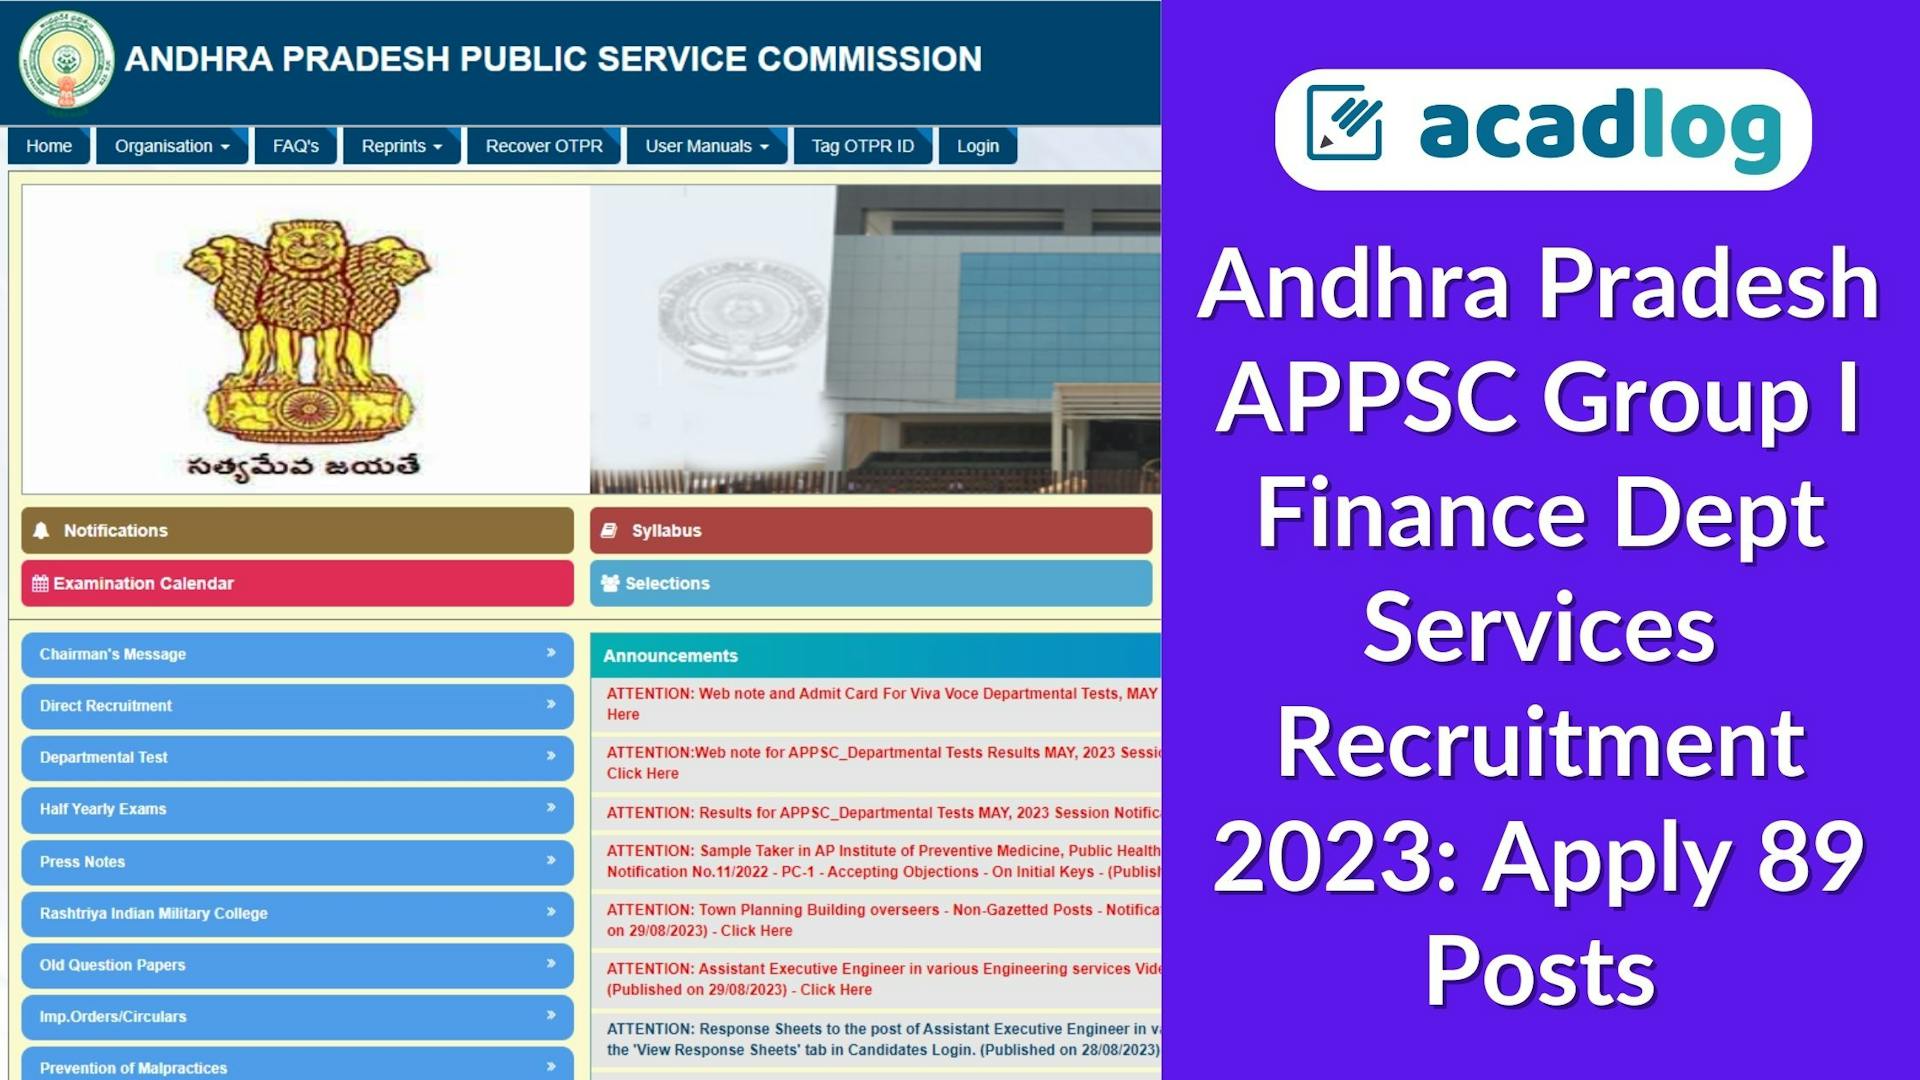 Andhra Pradesh APPSC Group I Finance Dept Services Recruitment 2023: Apply 89 Posts